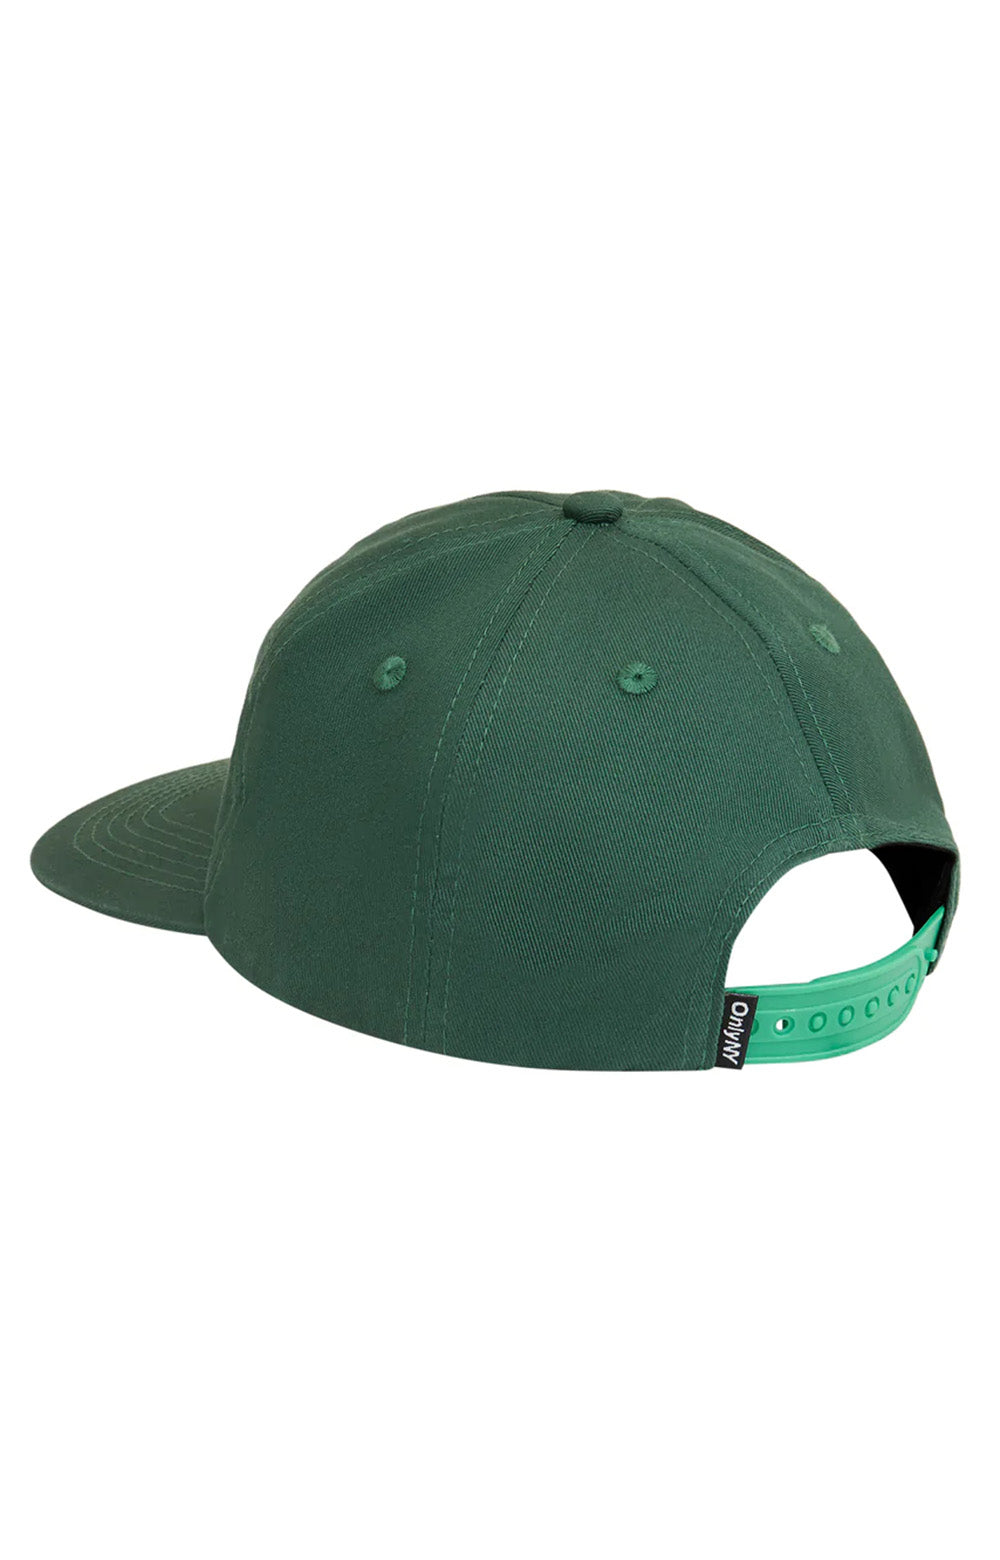 Shop Snap-Back Hat - Dark Green